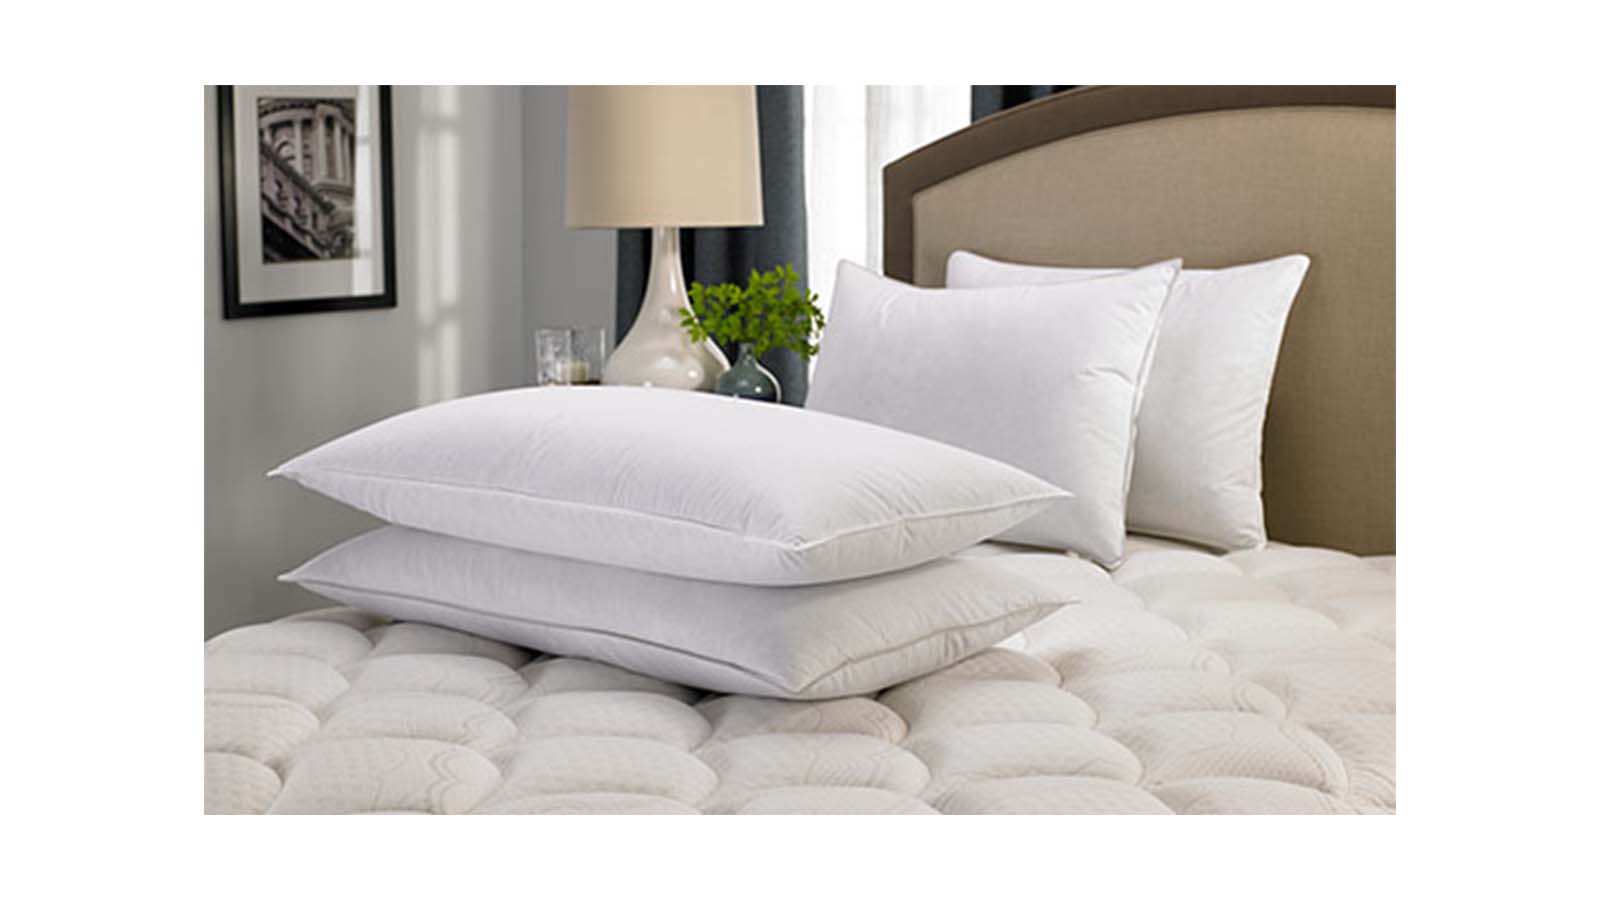 Wynn Resorts Euro Pillow